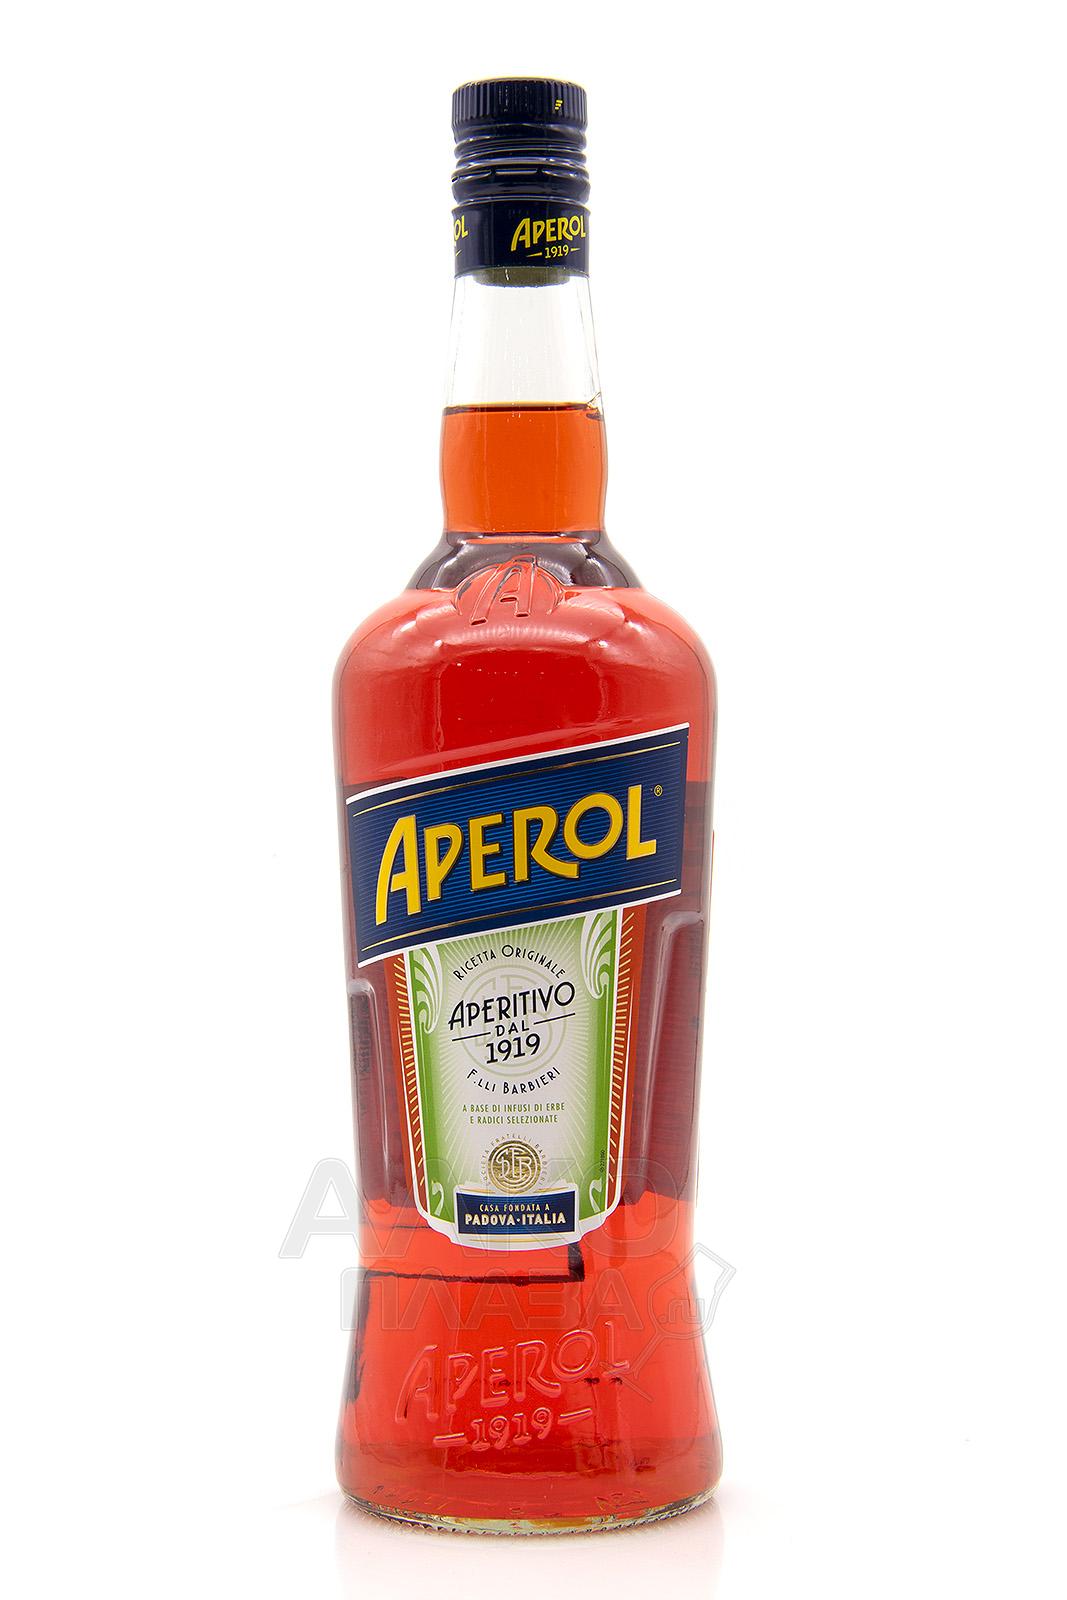 Aperol - ликер Апероль 1 л